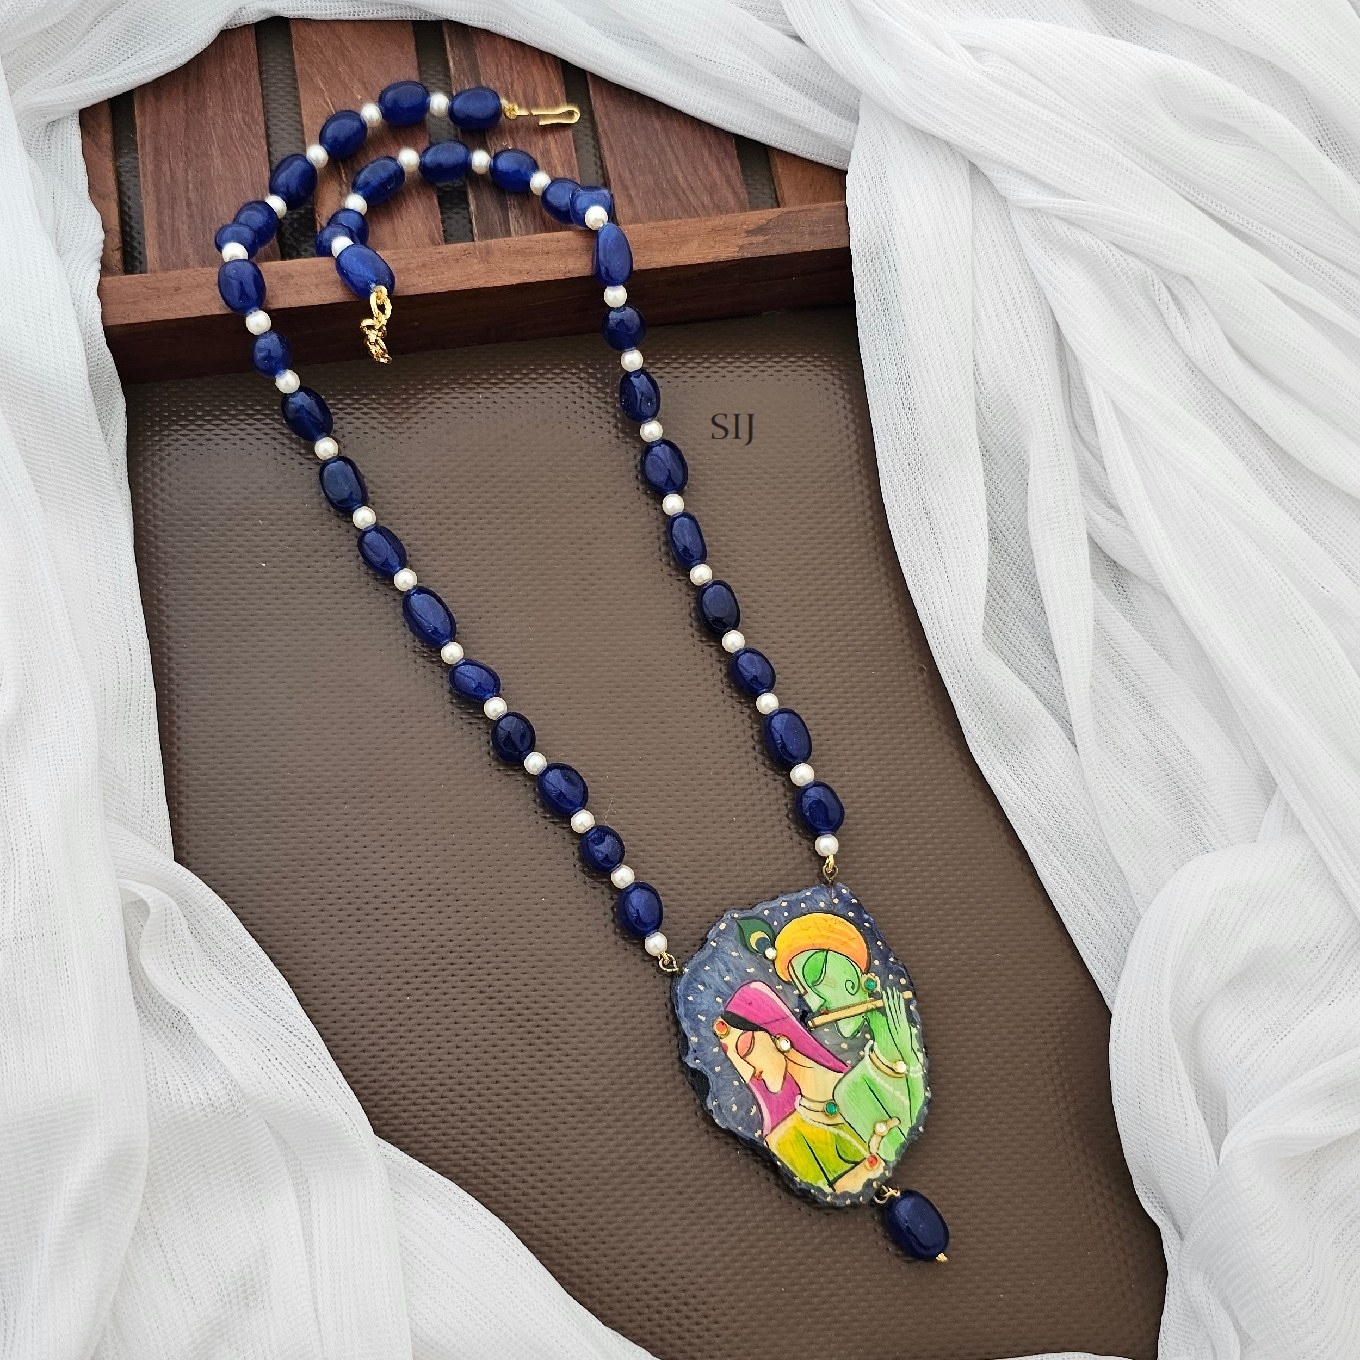 Blue Beads Chain with Radha krishna Pendant